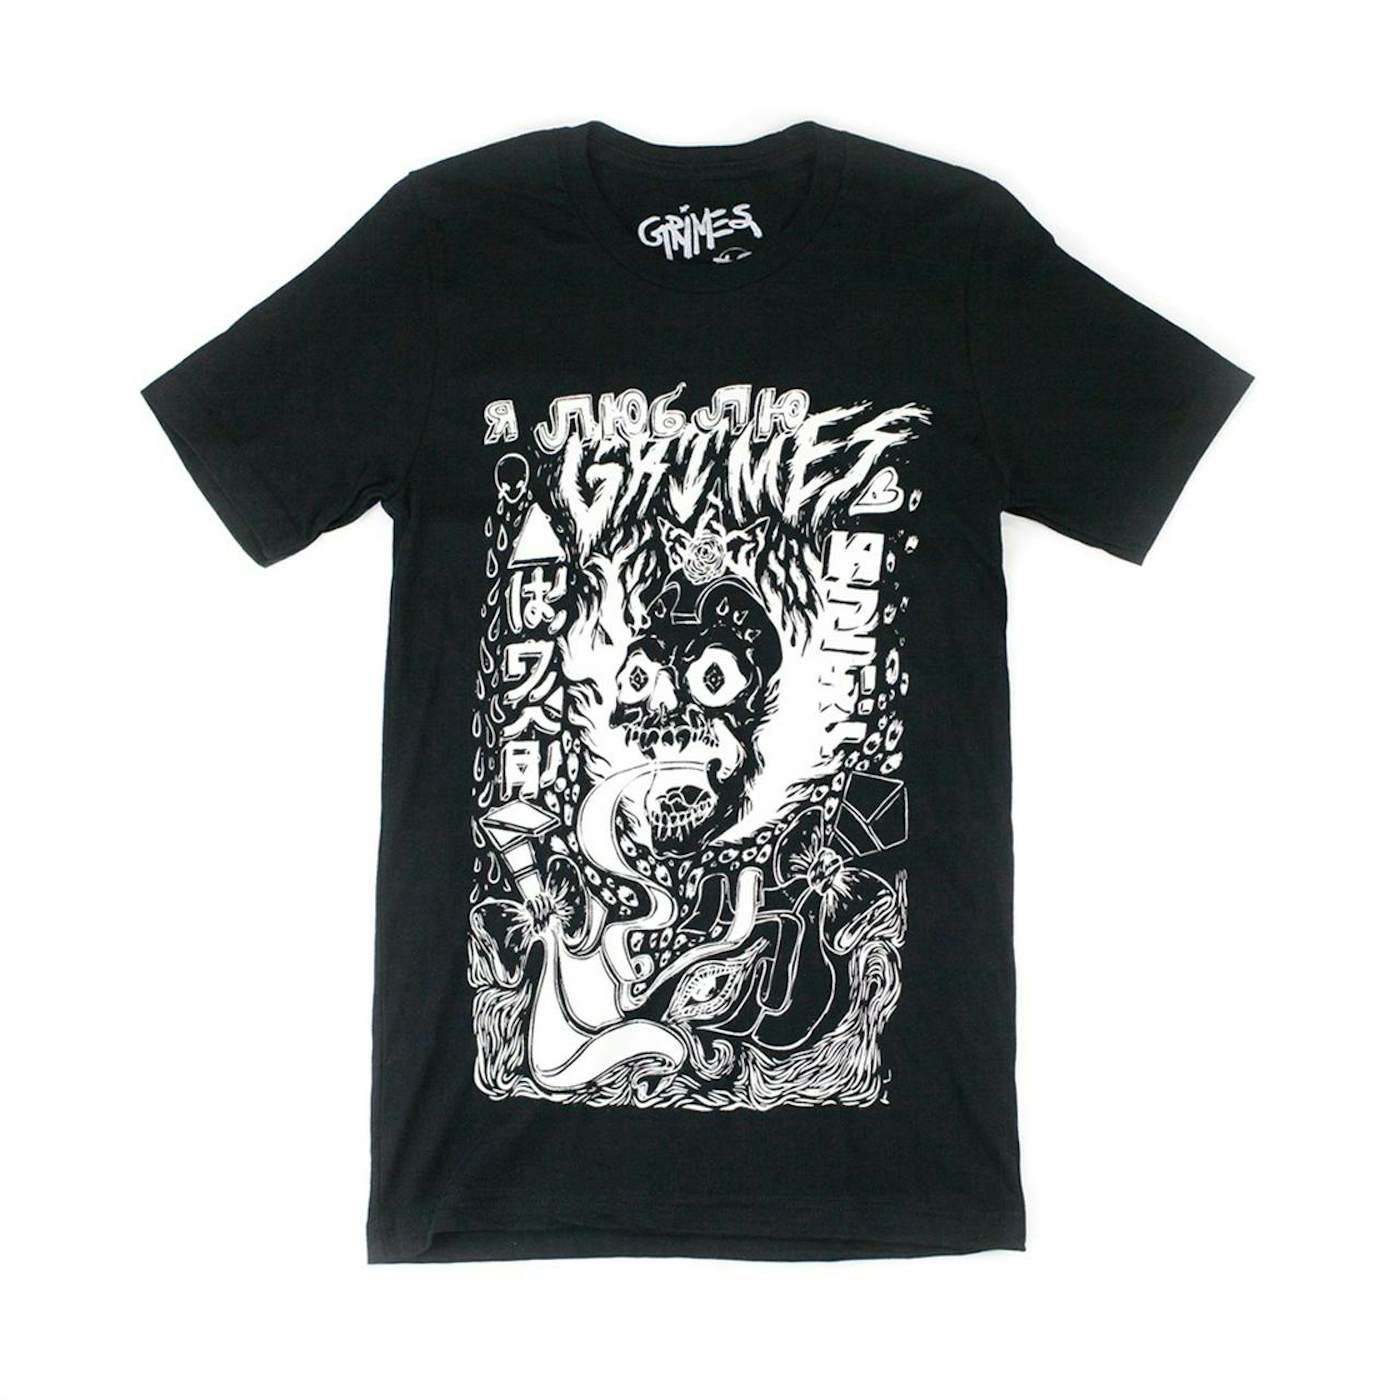 Grimes Black Visions T-Shirt